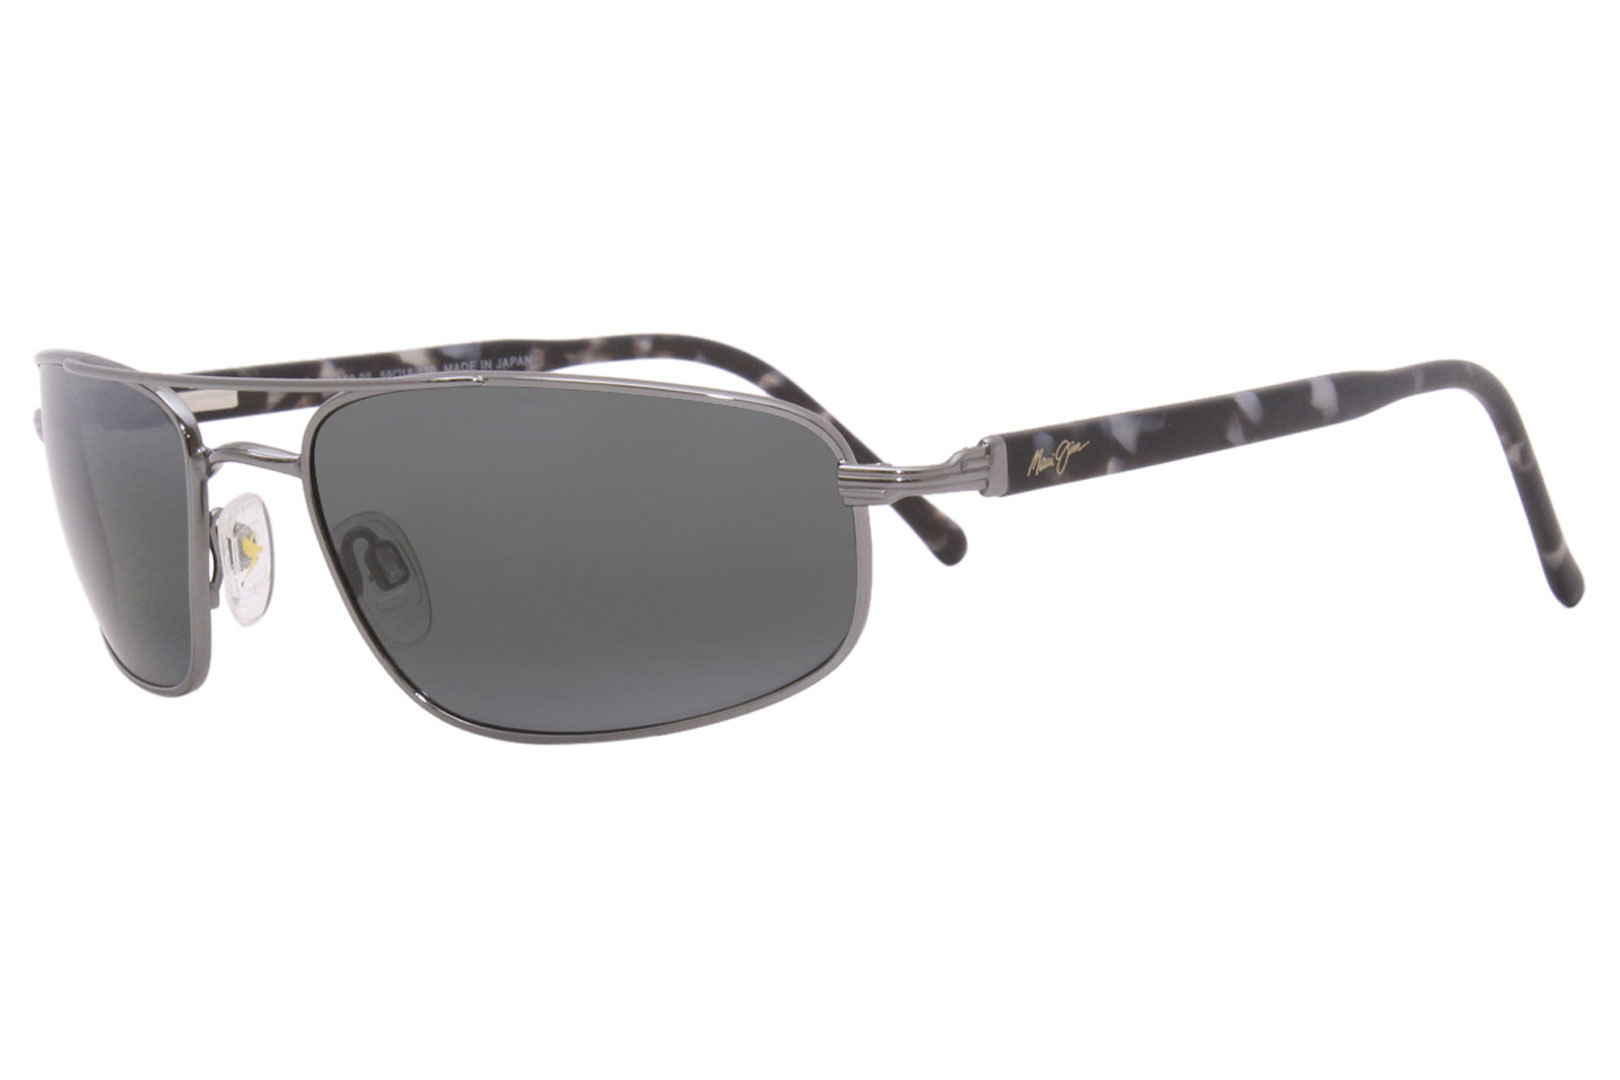 Maui Jim Kahuna Sunglasses w/ Gunmetal Frame and Neutral Grey Lenses - 162-02